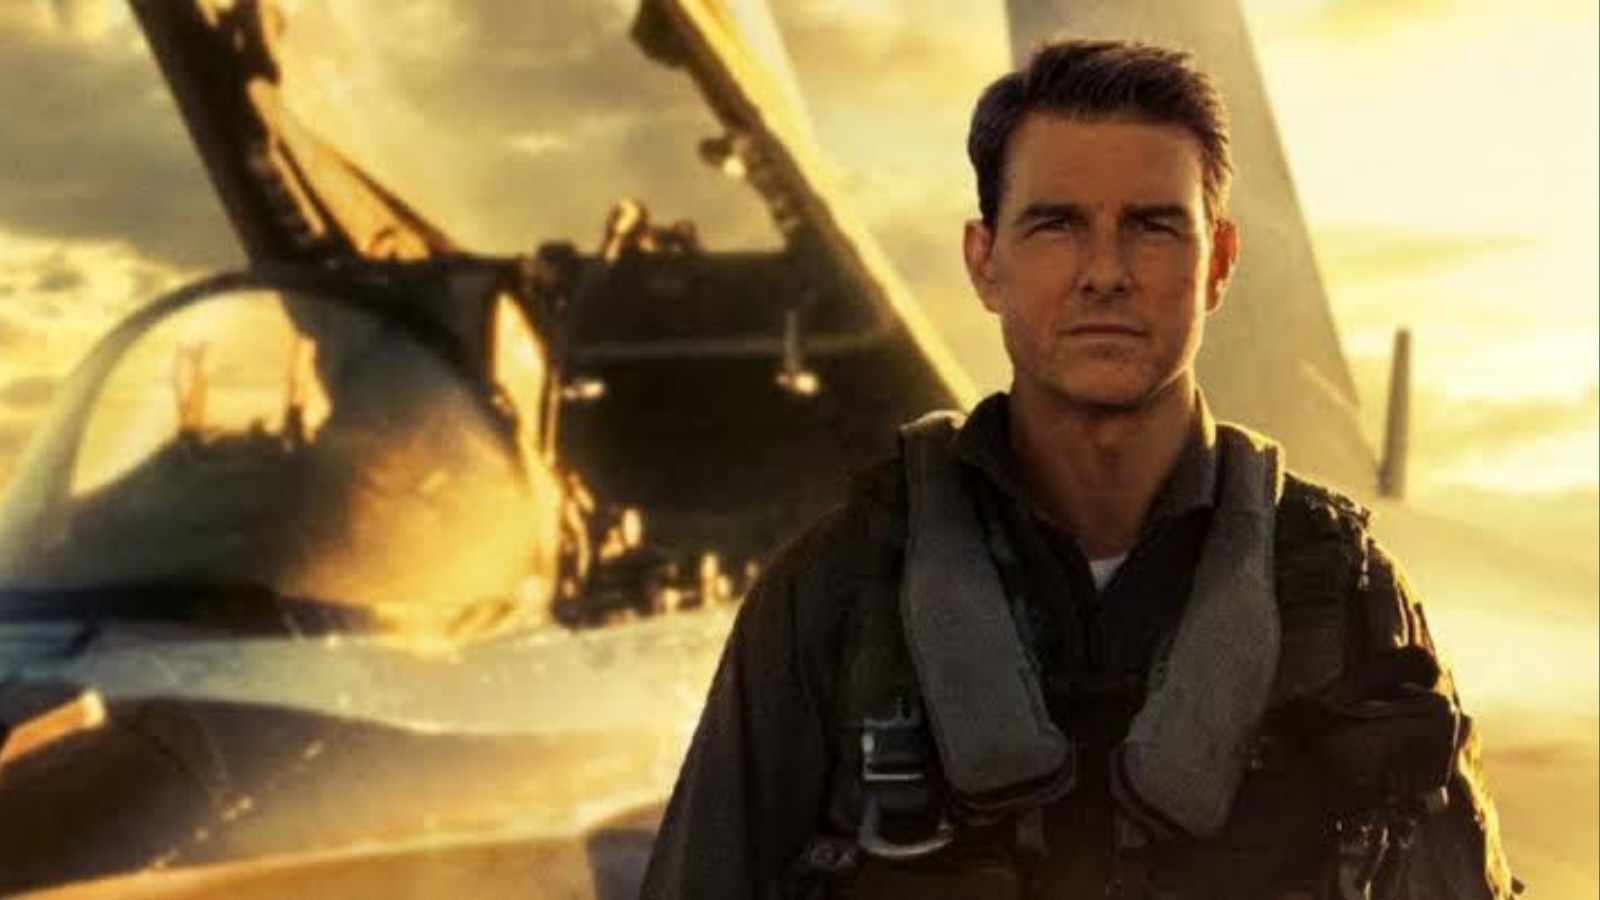 Tom Cruise recieves massive payday thanks to Top Gun: Maverick's success